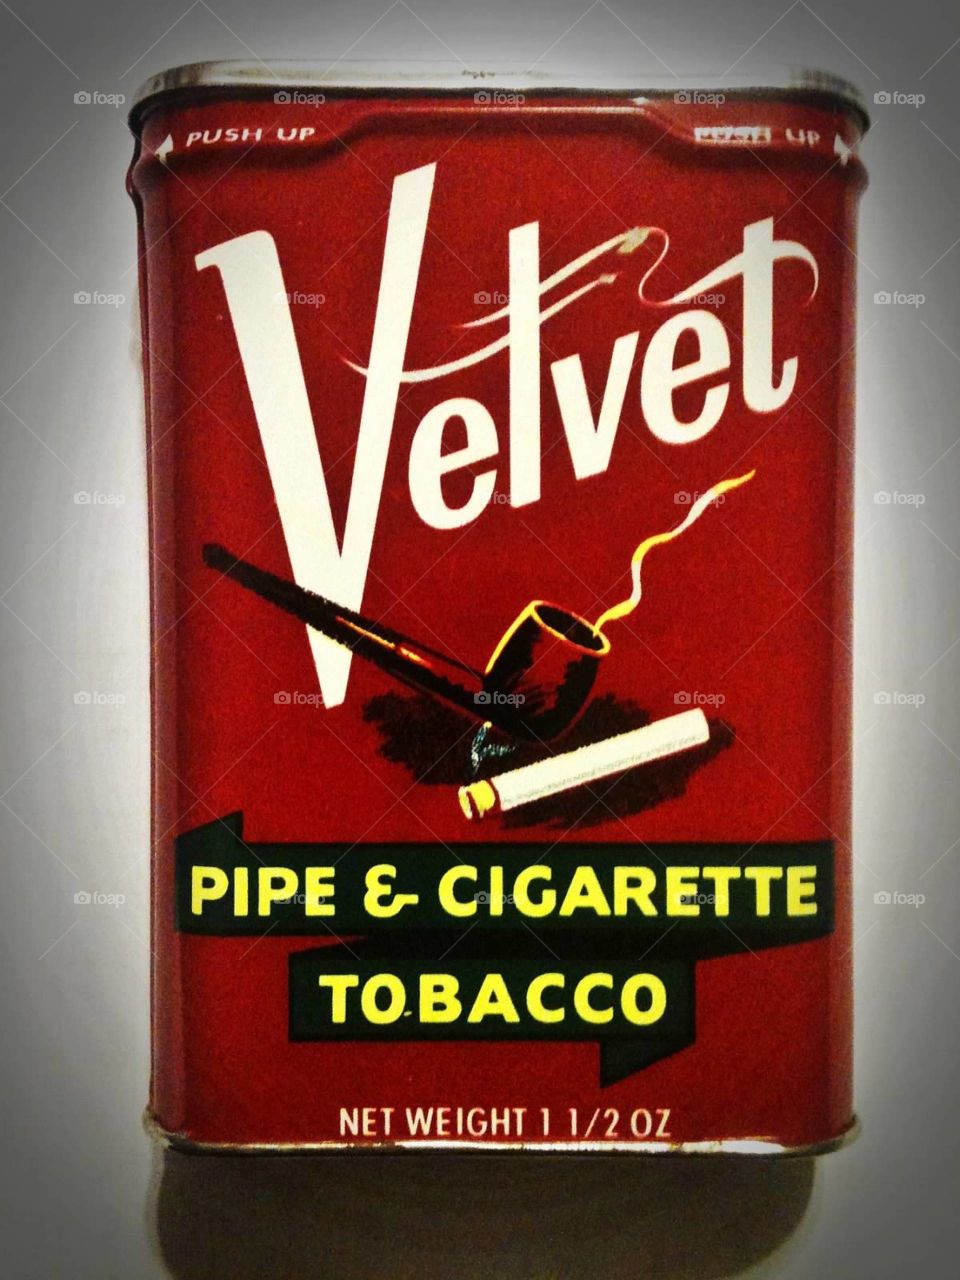 Vintage Velvet Tobacco Tin